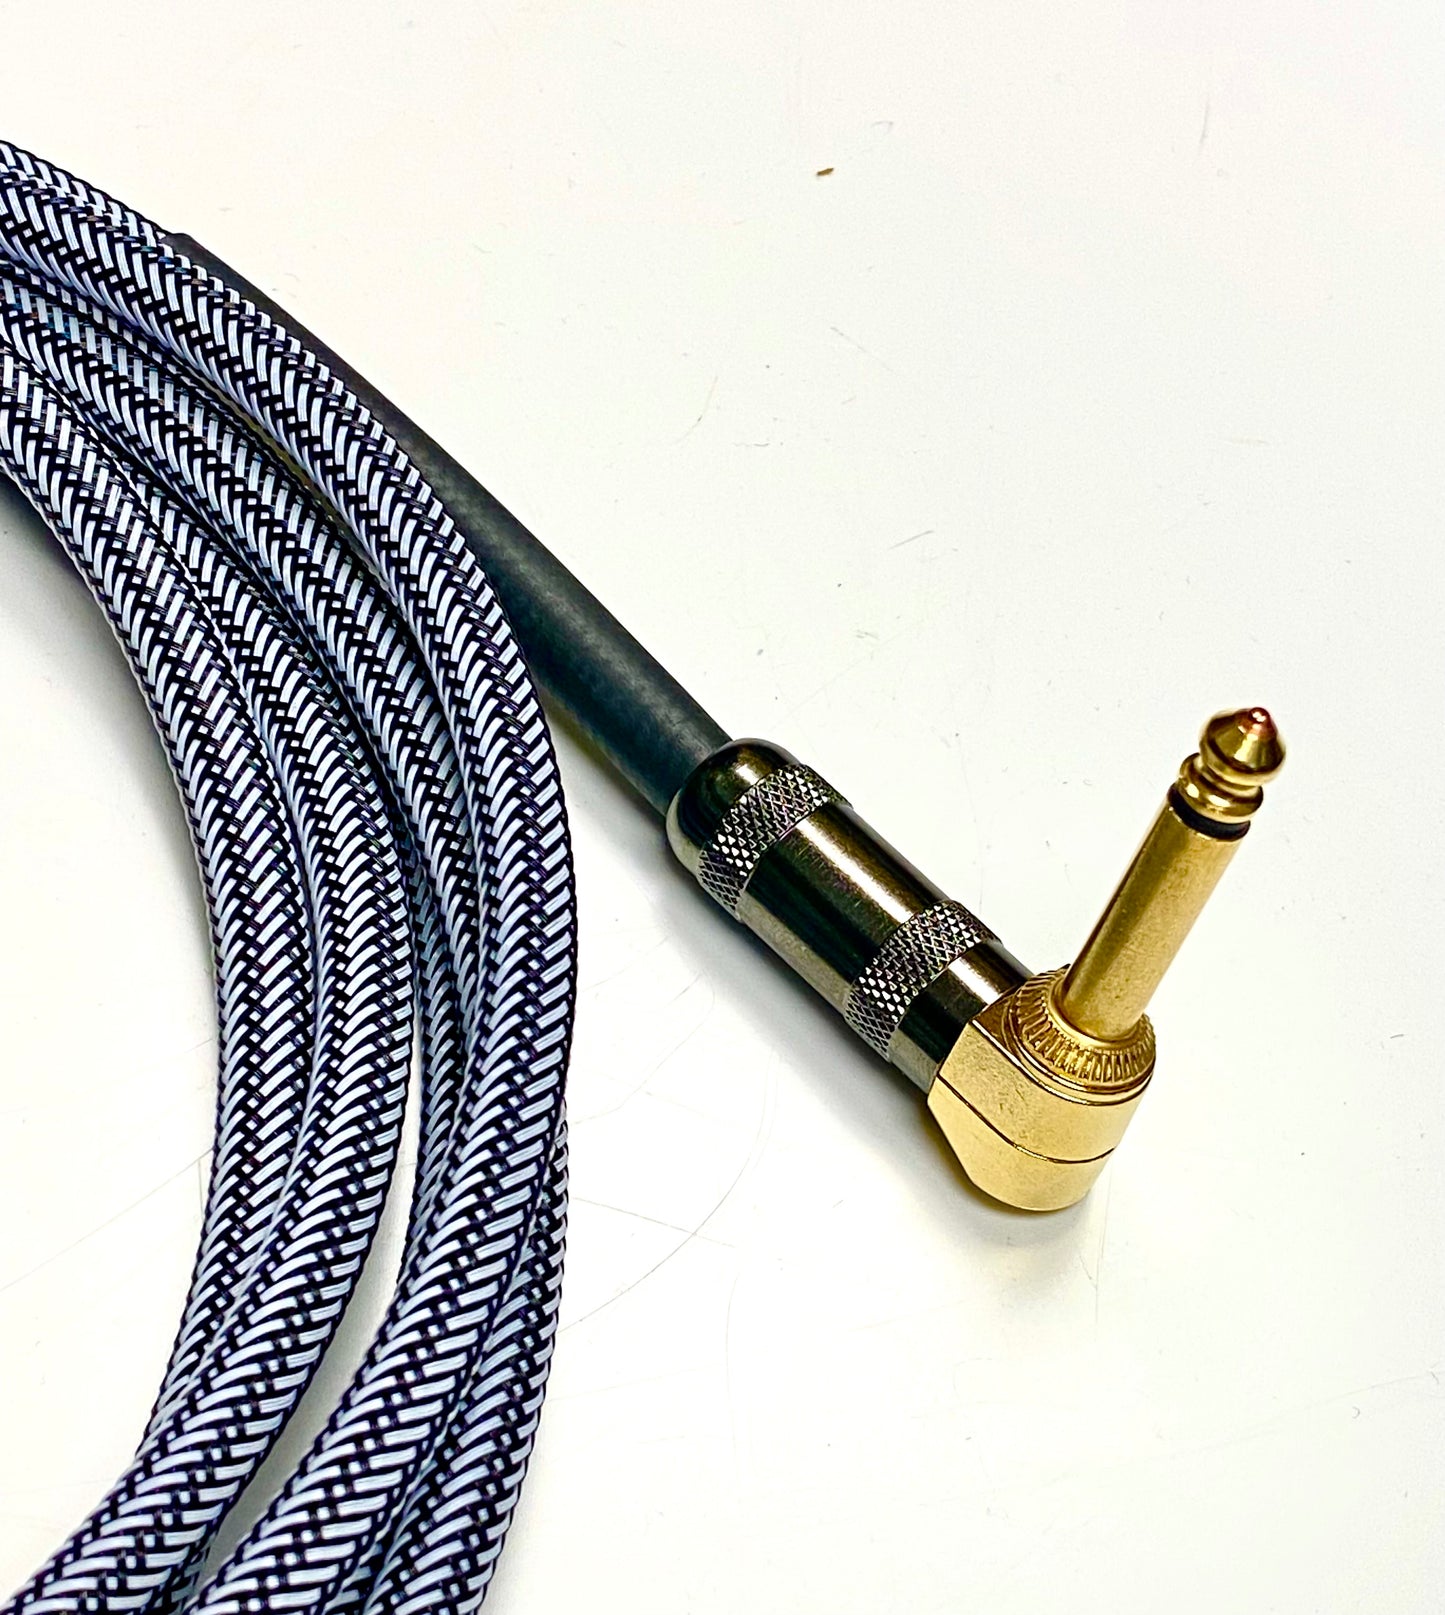 Leprechaun Gold Instrument Cable (White/Black)